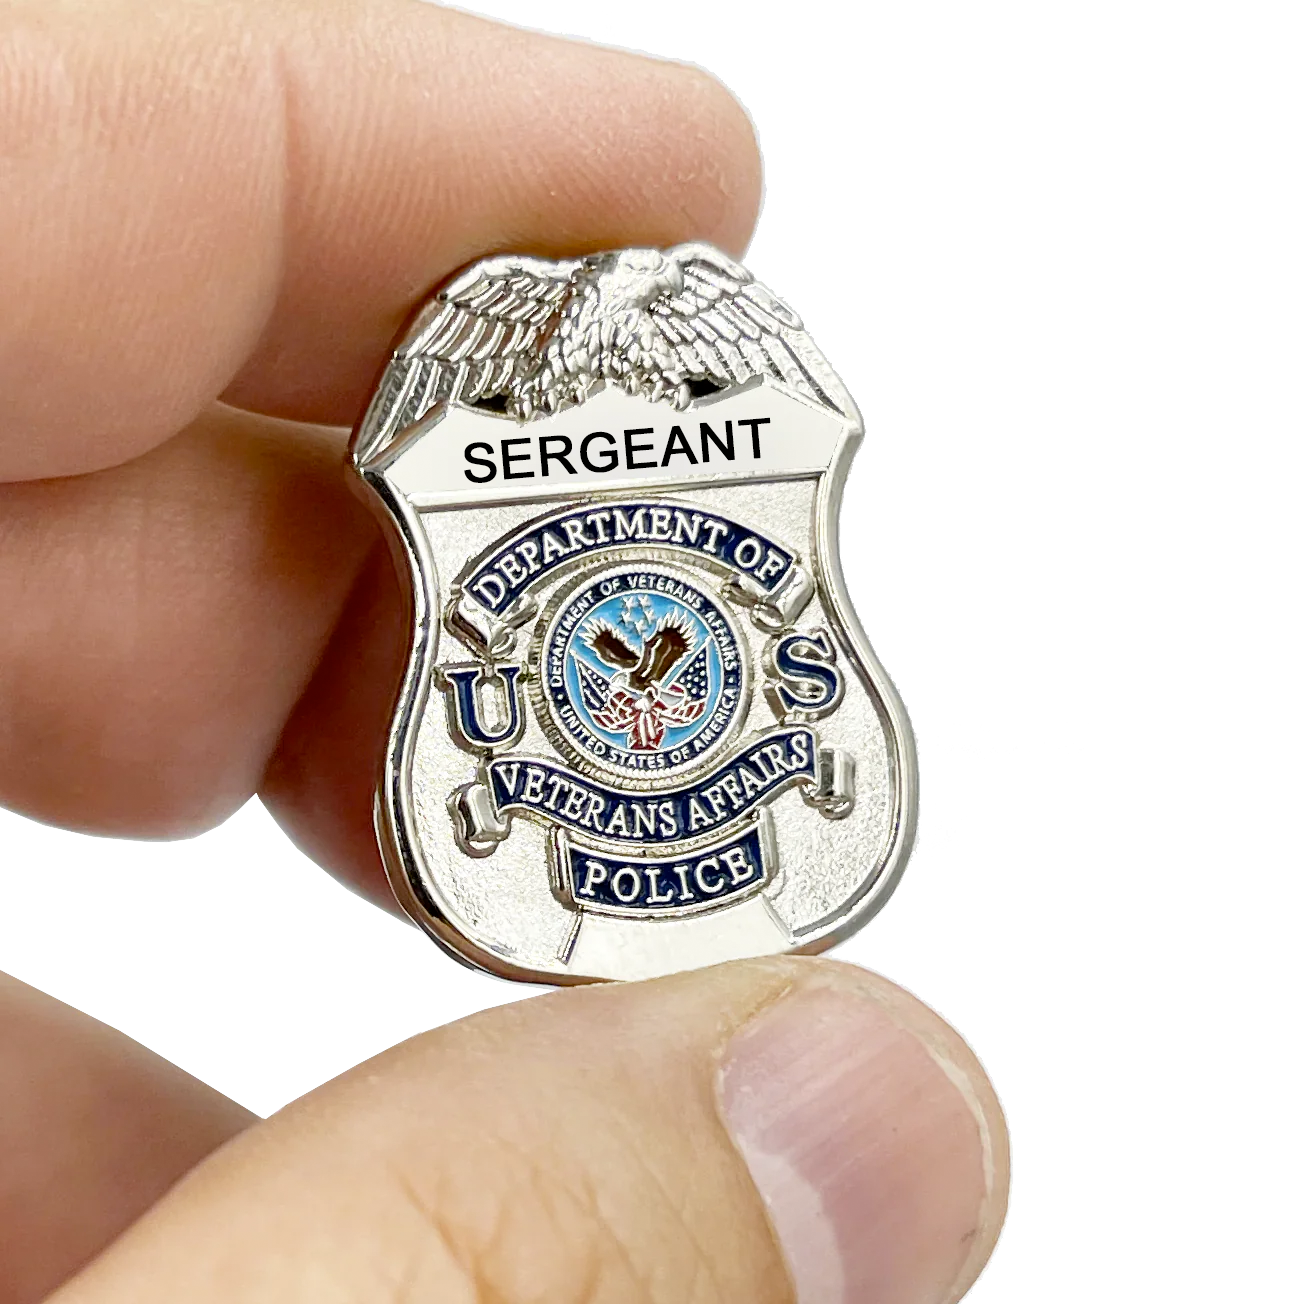 PBX-004-G VA Veterans Affairs Administration lapel pin for SERGEANT Police Officer